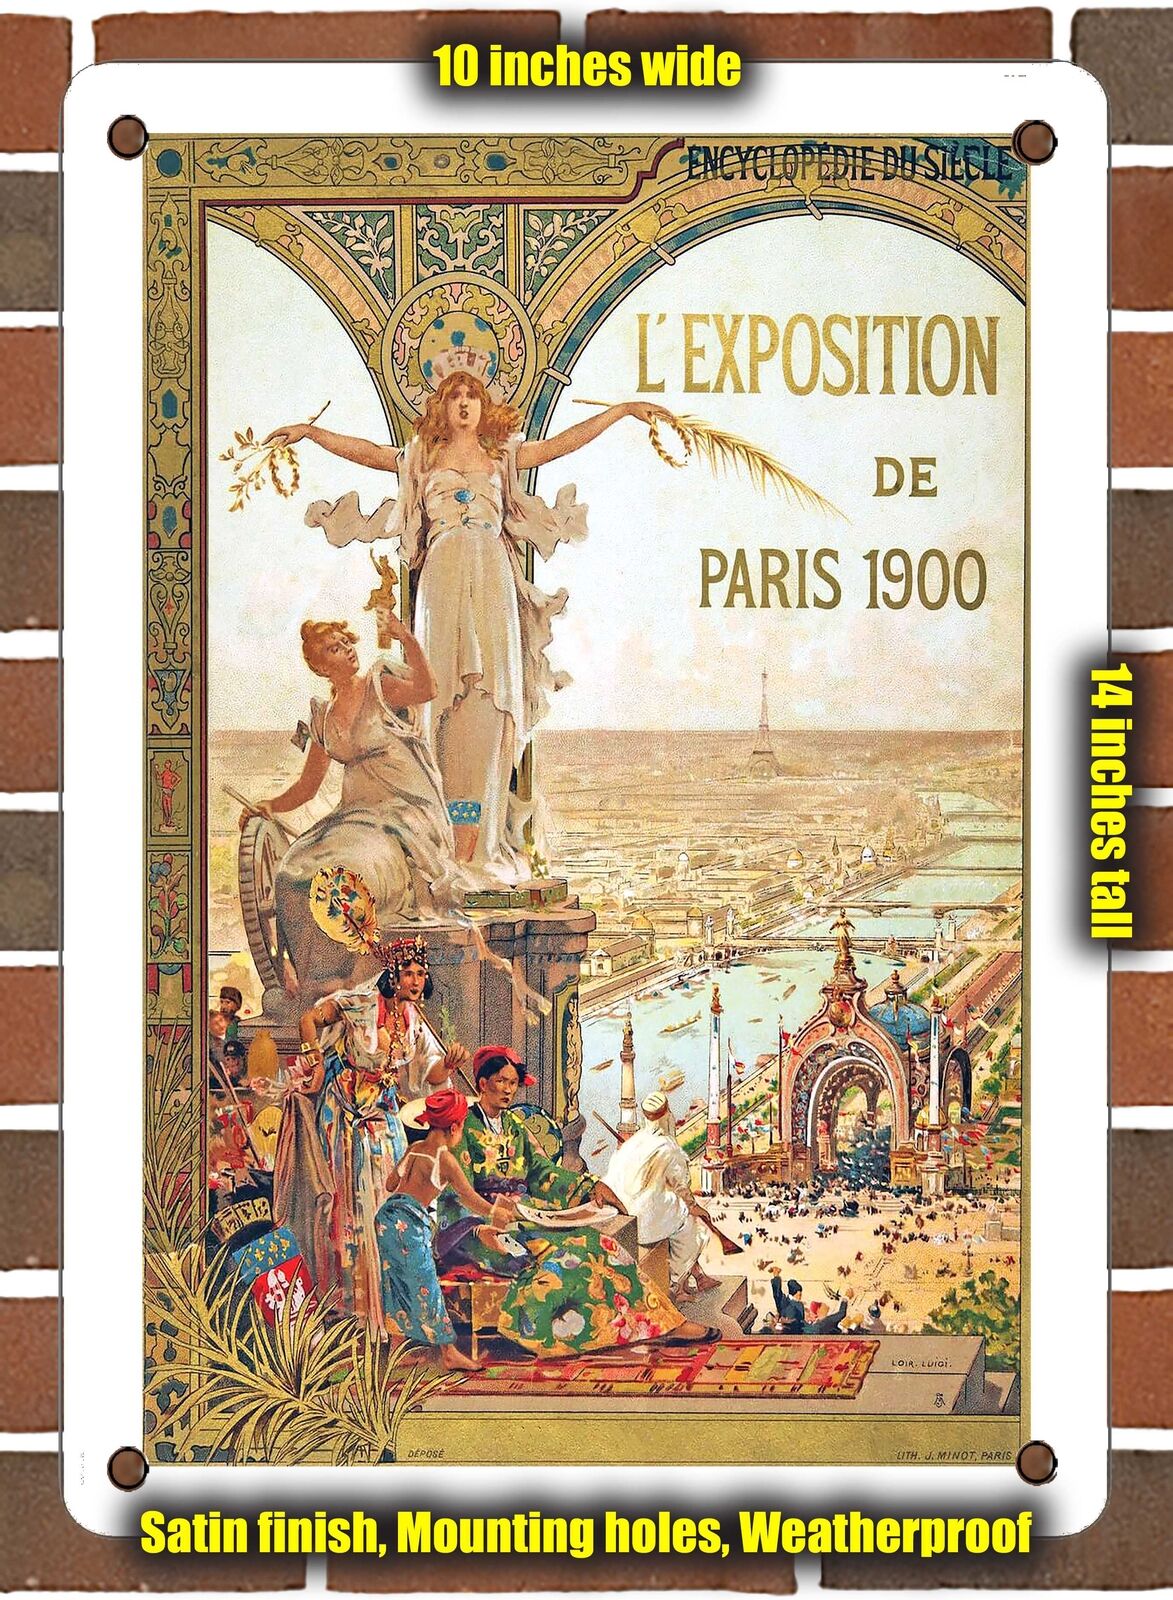 METAL SIGN - 1900 Paris Exhibition - 10x14 Inches